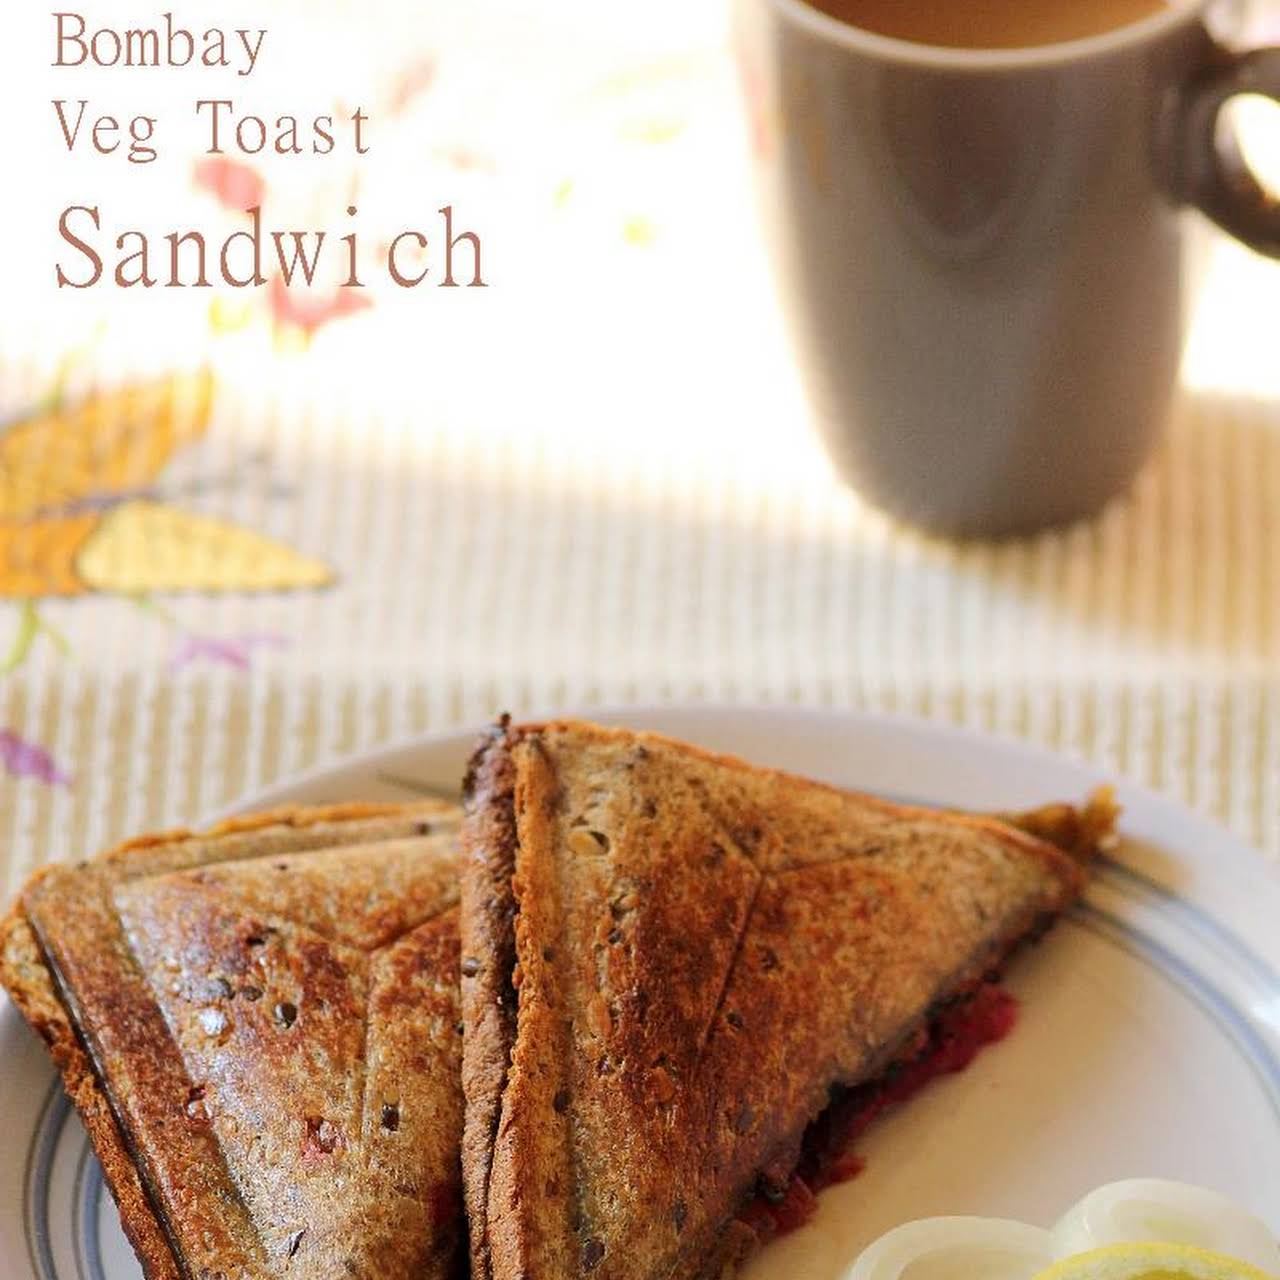 Bombay Veg Toast Sandwich Recipe - How to make Vegetable Toast Sandwich Recipe - Mumbai Street Food Recipes